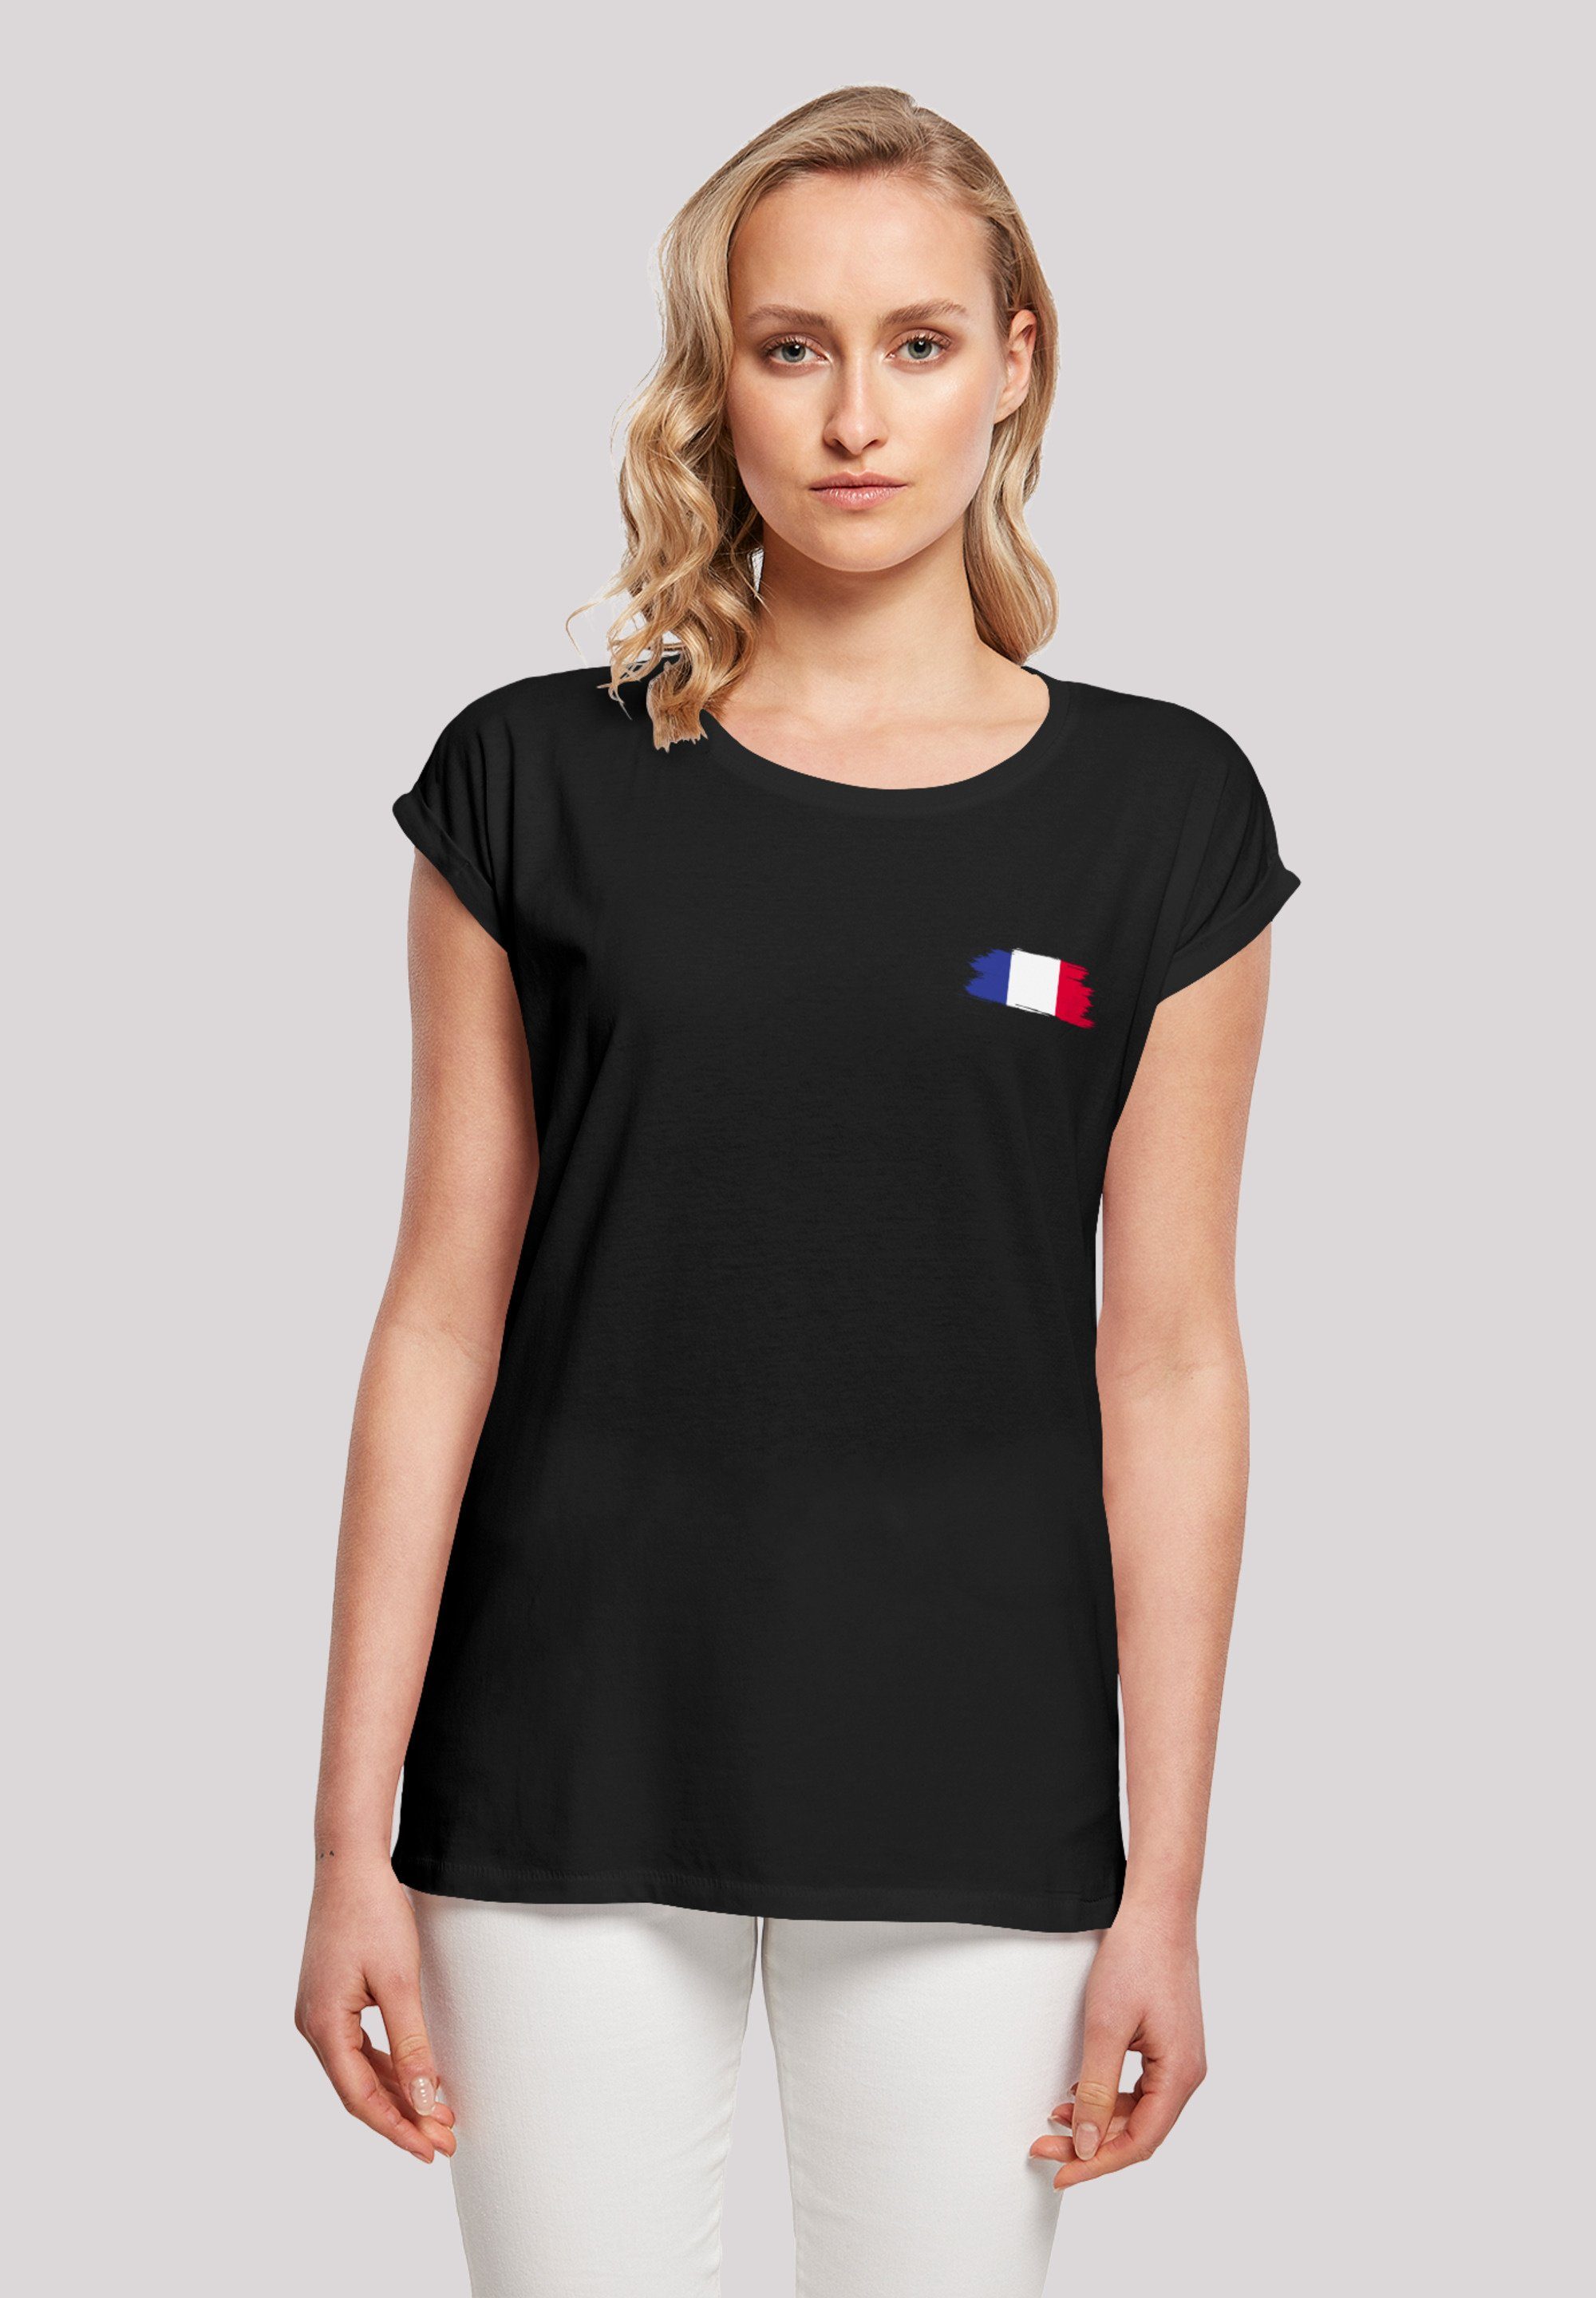 France und Frankreich Print, groß F4NT4STIC Flagge 170 cm ist M Model trägt Fahne Das T-Shirt Größe